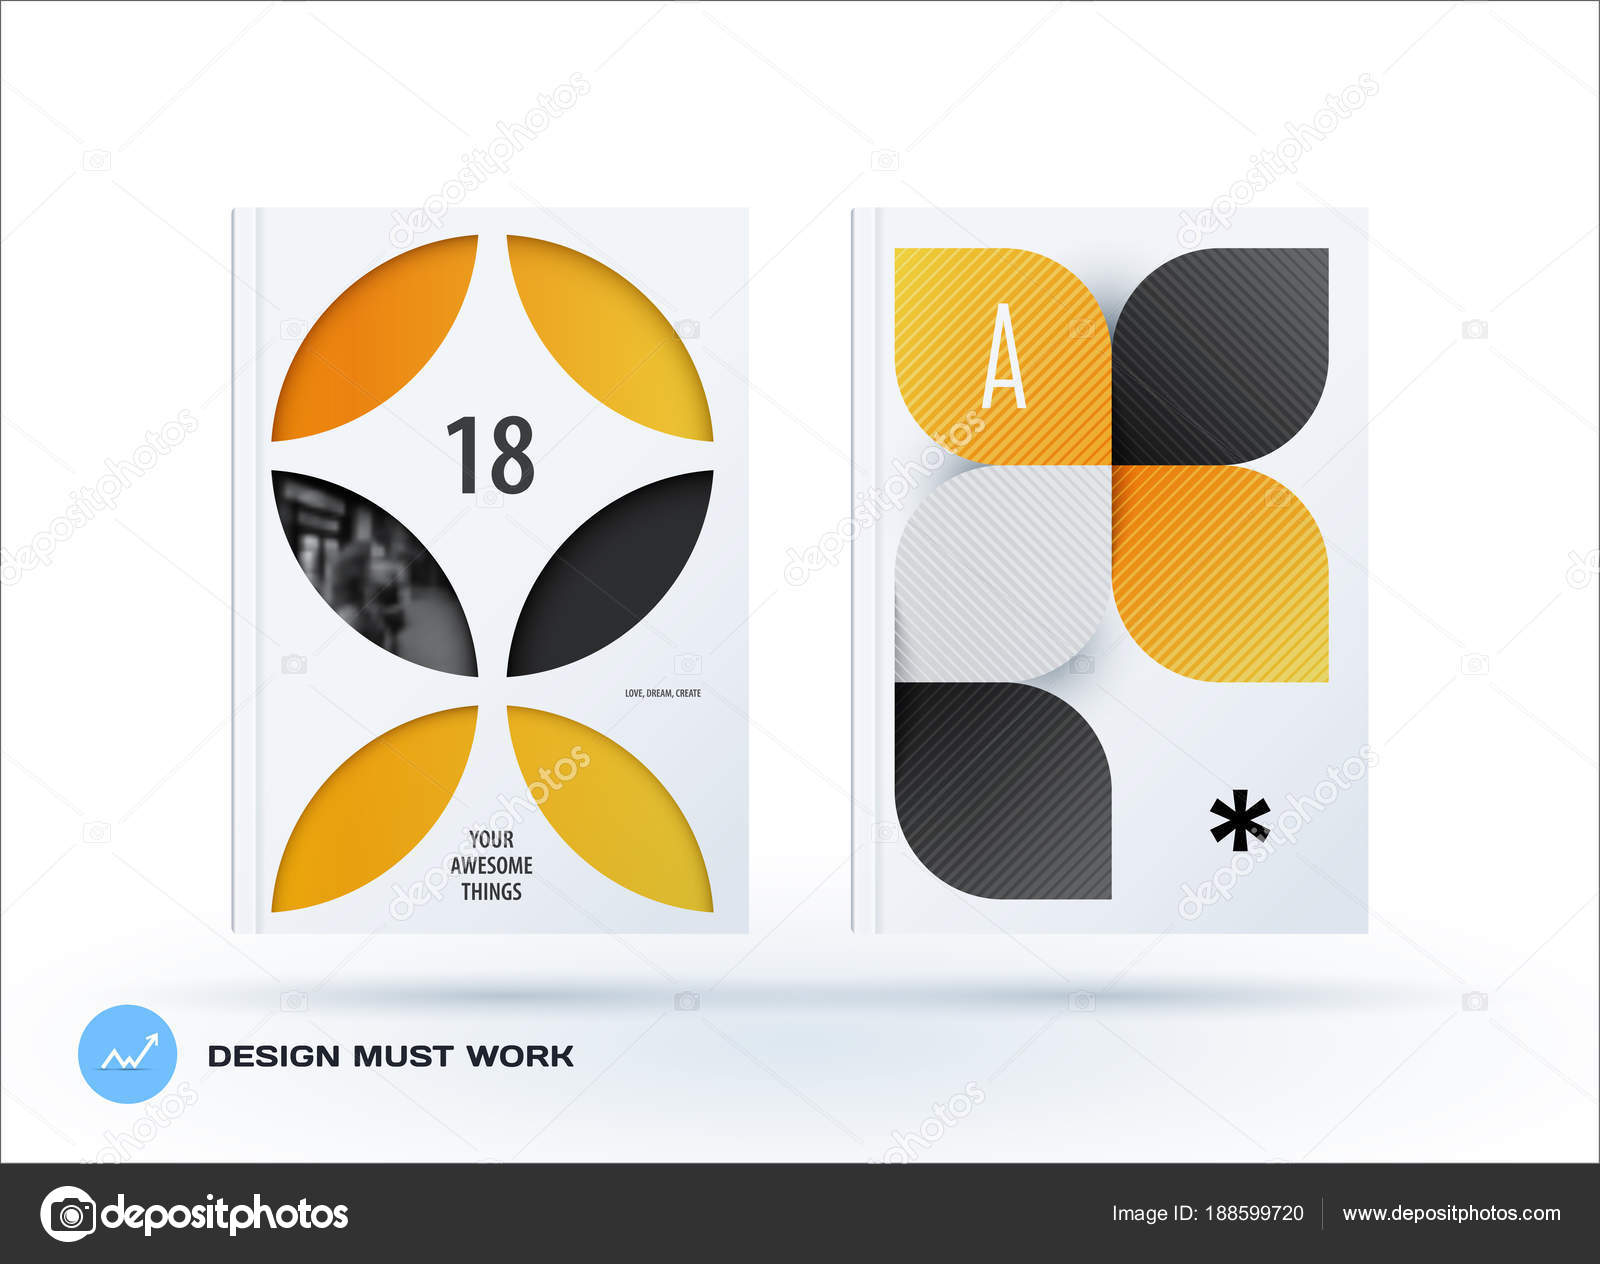 Business Design Broschure Abstrakter Jahresbericht Horizontaler Deckblatt Flyer In Vektorgrafik Lizenzfreie Grafiken C To Diamond Graphics Gmail Com Depositphotos